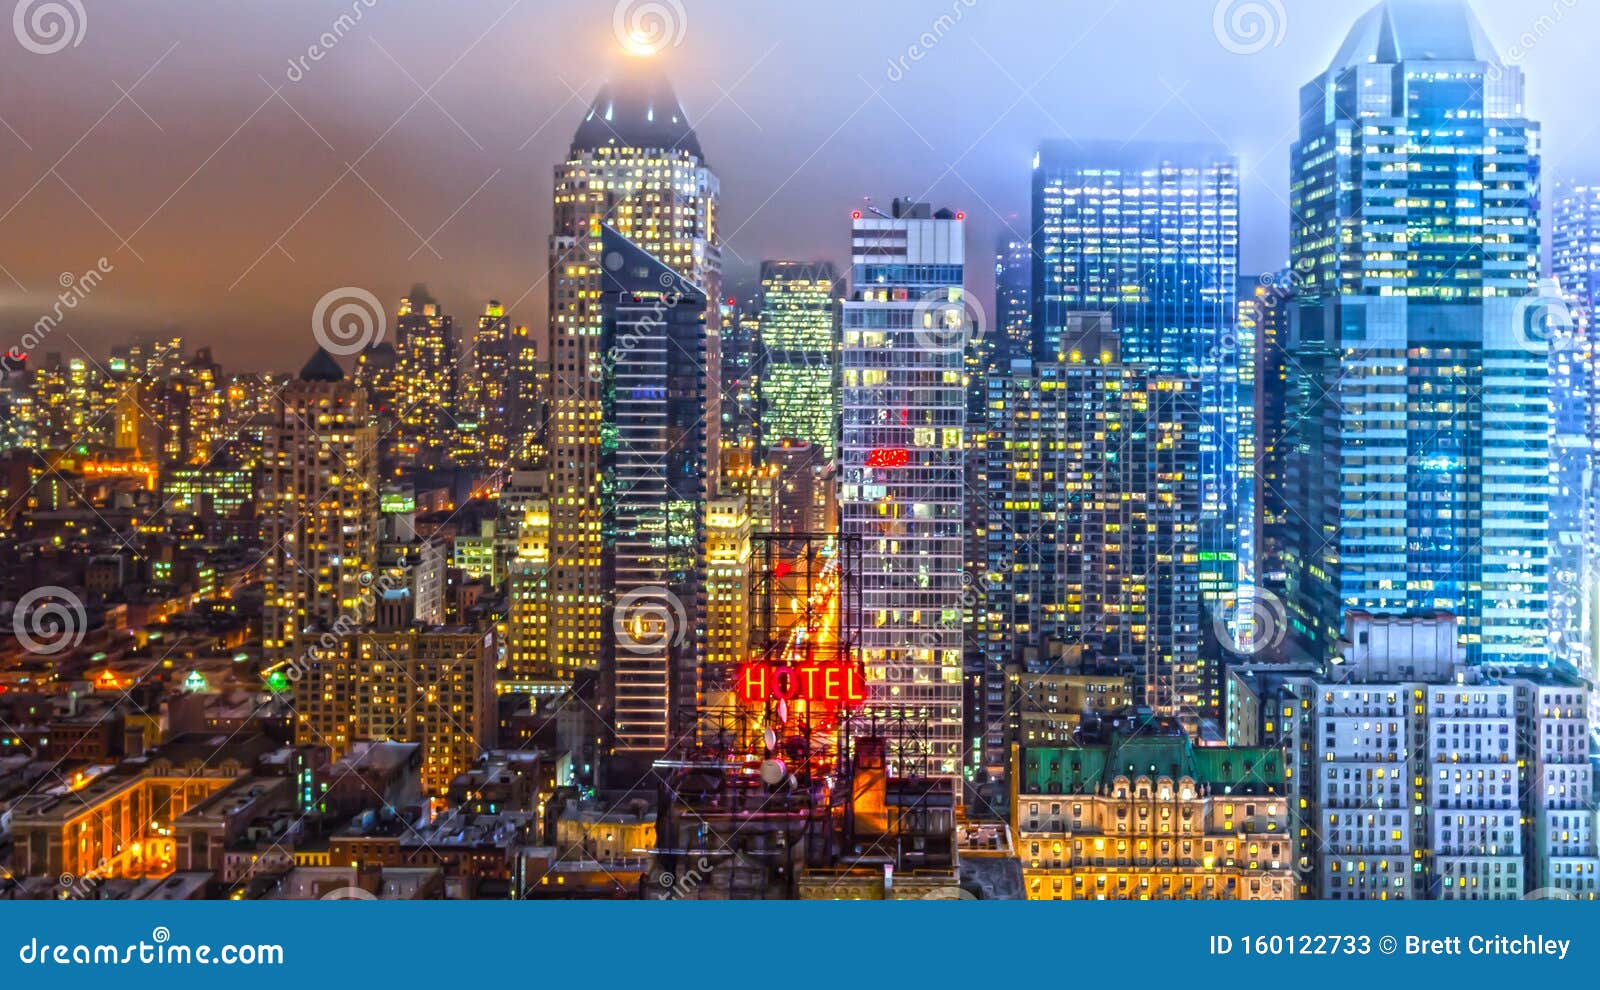 Parasit gele overlap Manhattan Big City Lights at Night Stock Image - Image of hotels,  electricity: 160122733